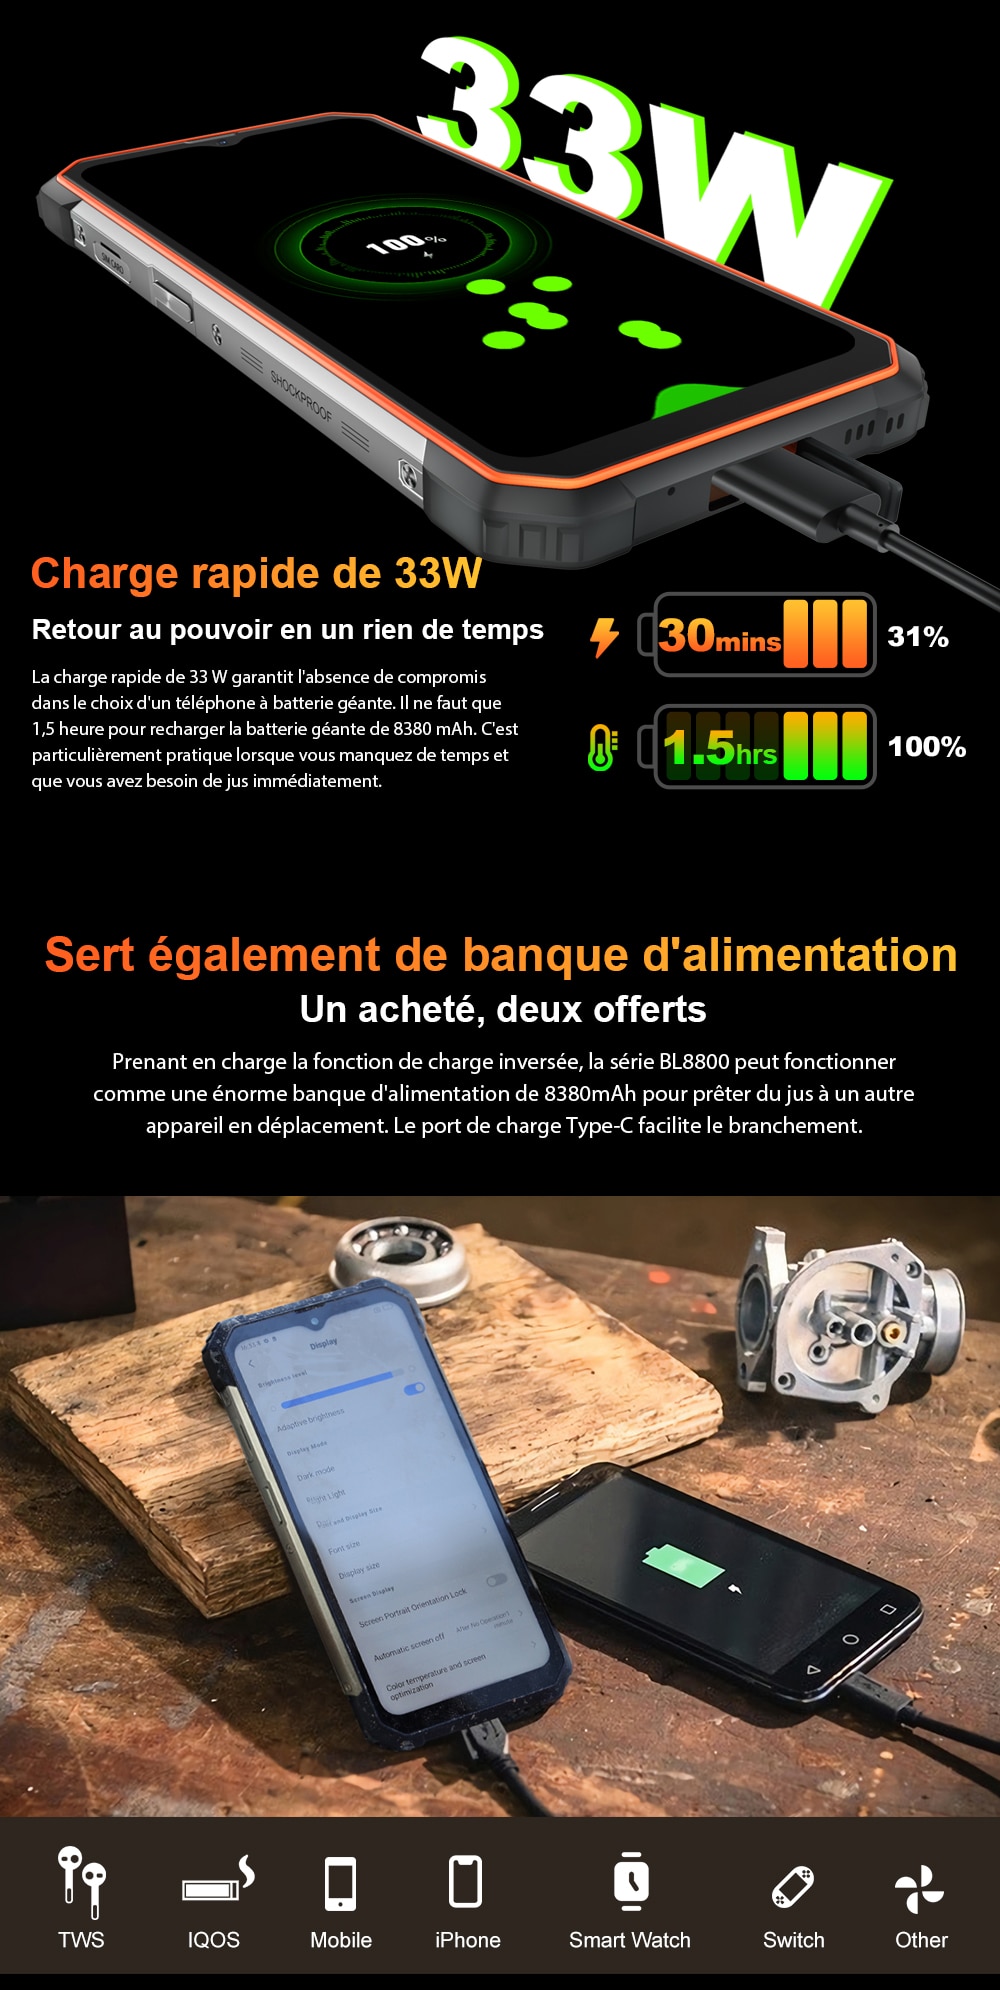 Blackview Chargeur de charge rapide - Blackview® France by Phones